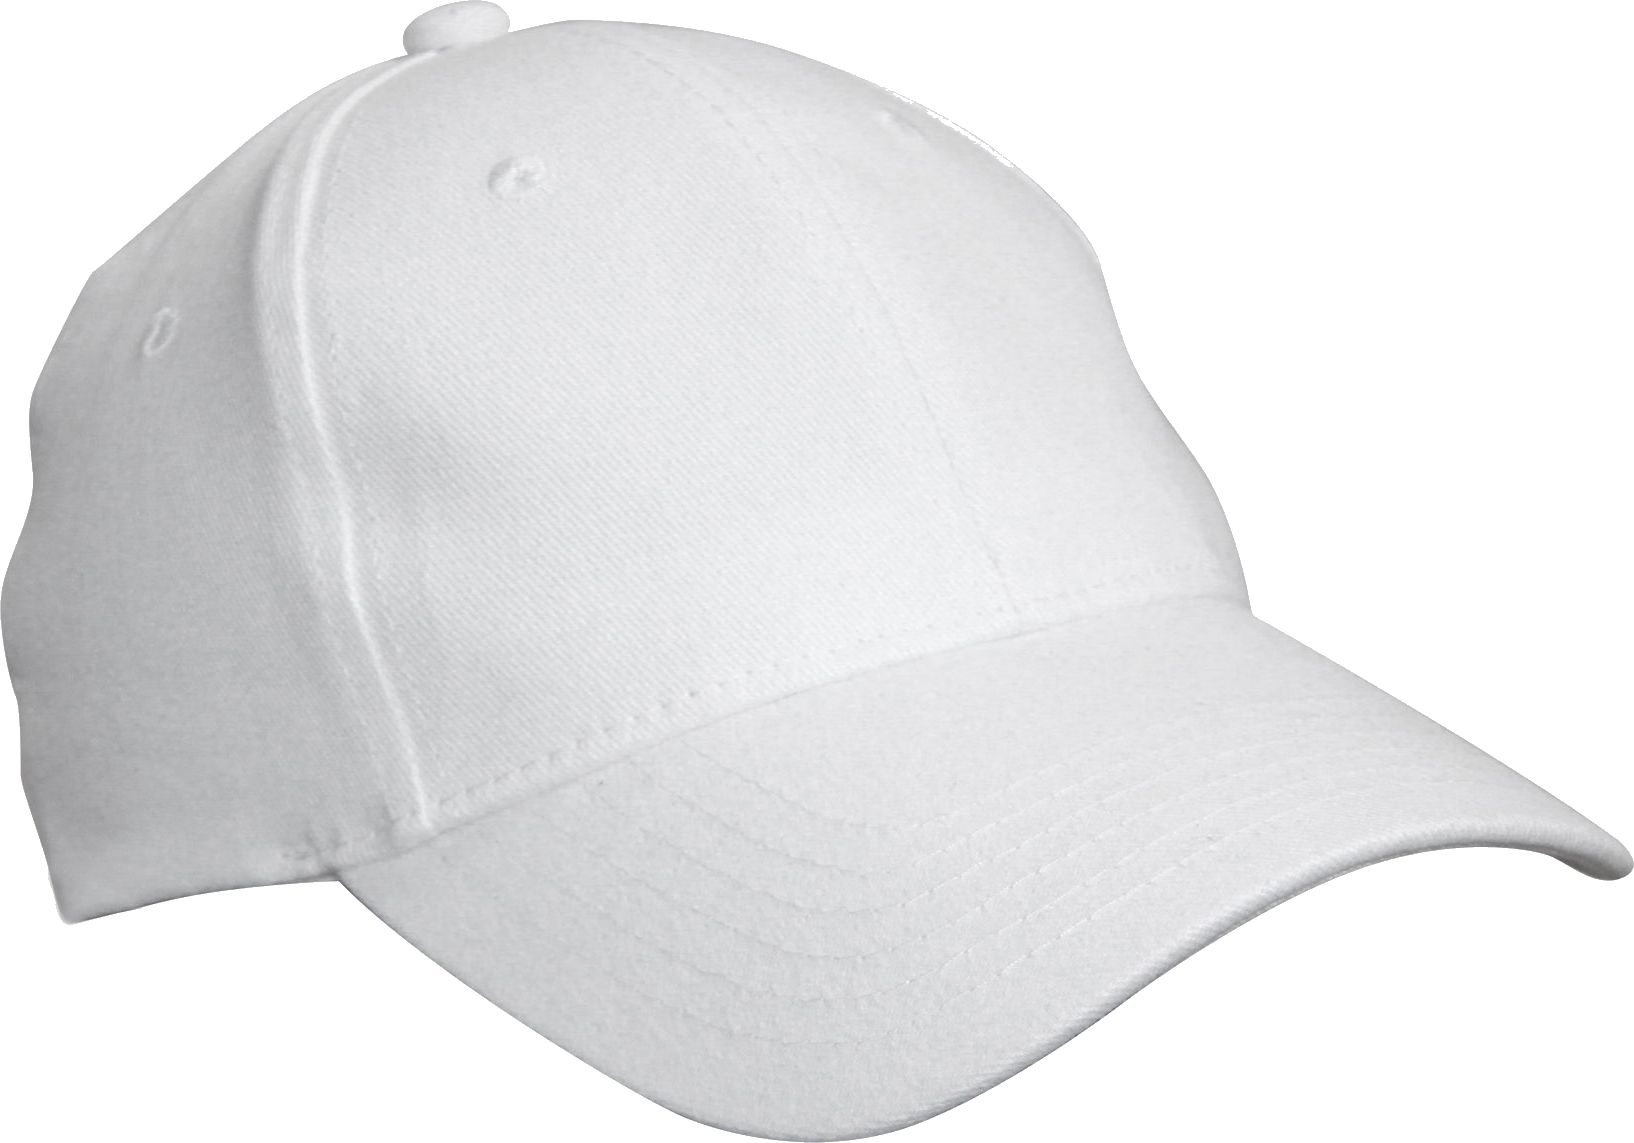 Download PNG image - Baseball White Hat Transparent Background 